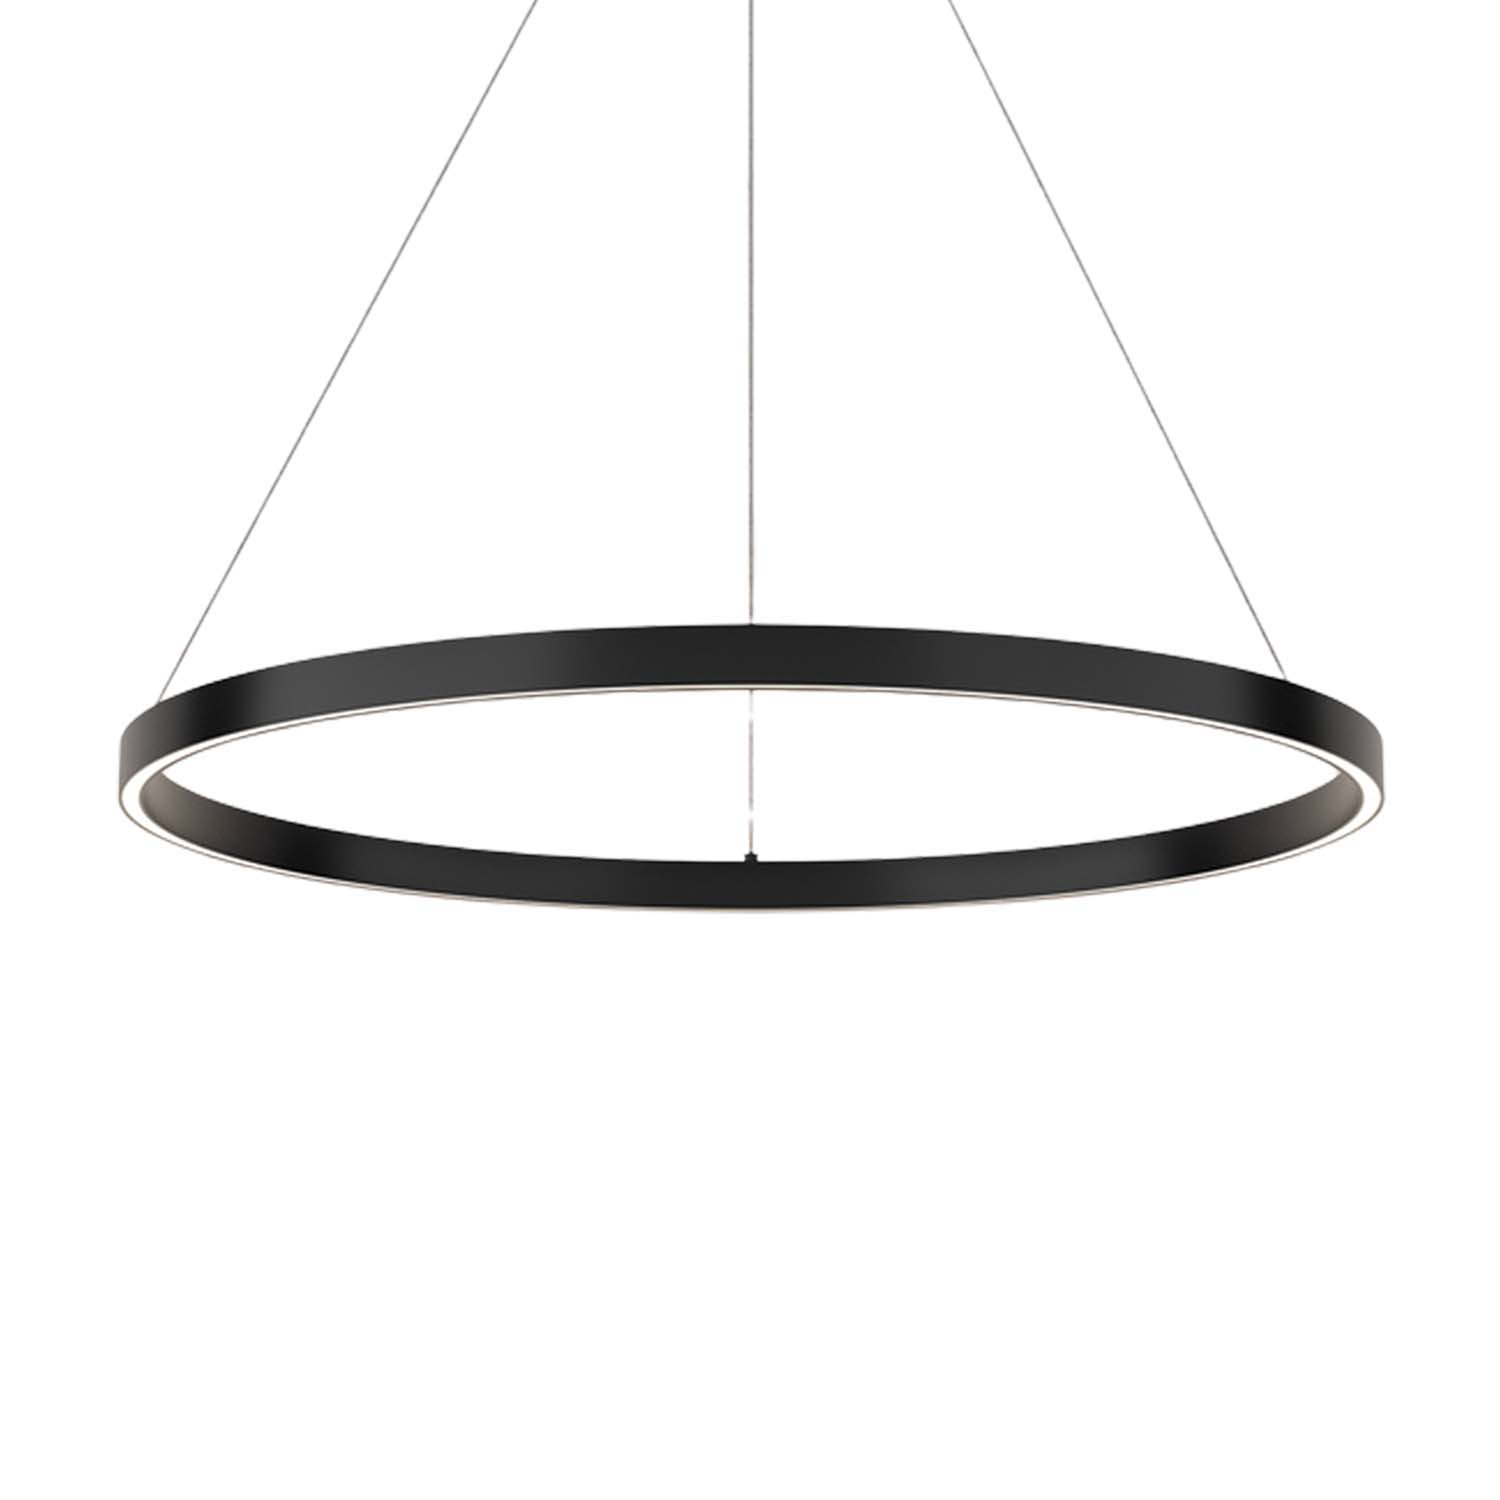 RIM - Gold or black ring pendant light, integrated LED